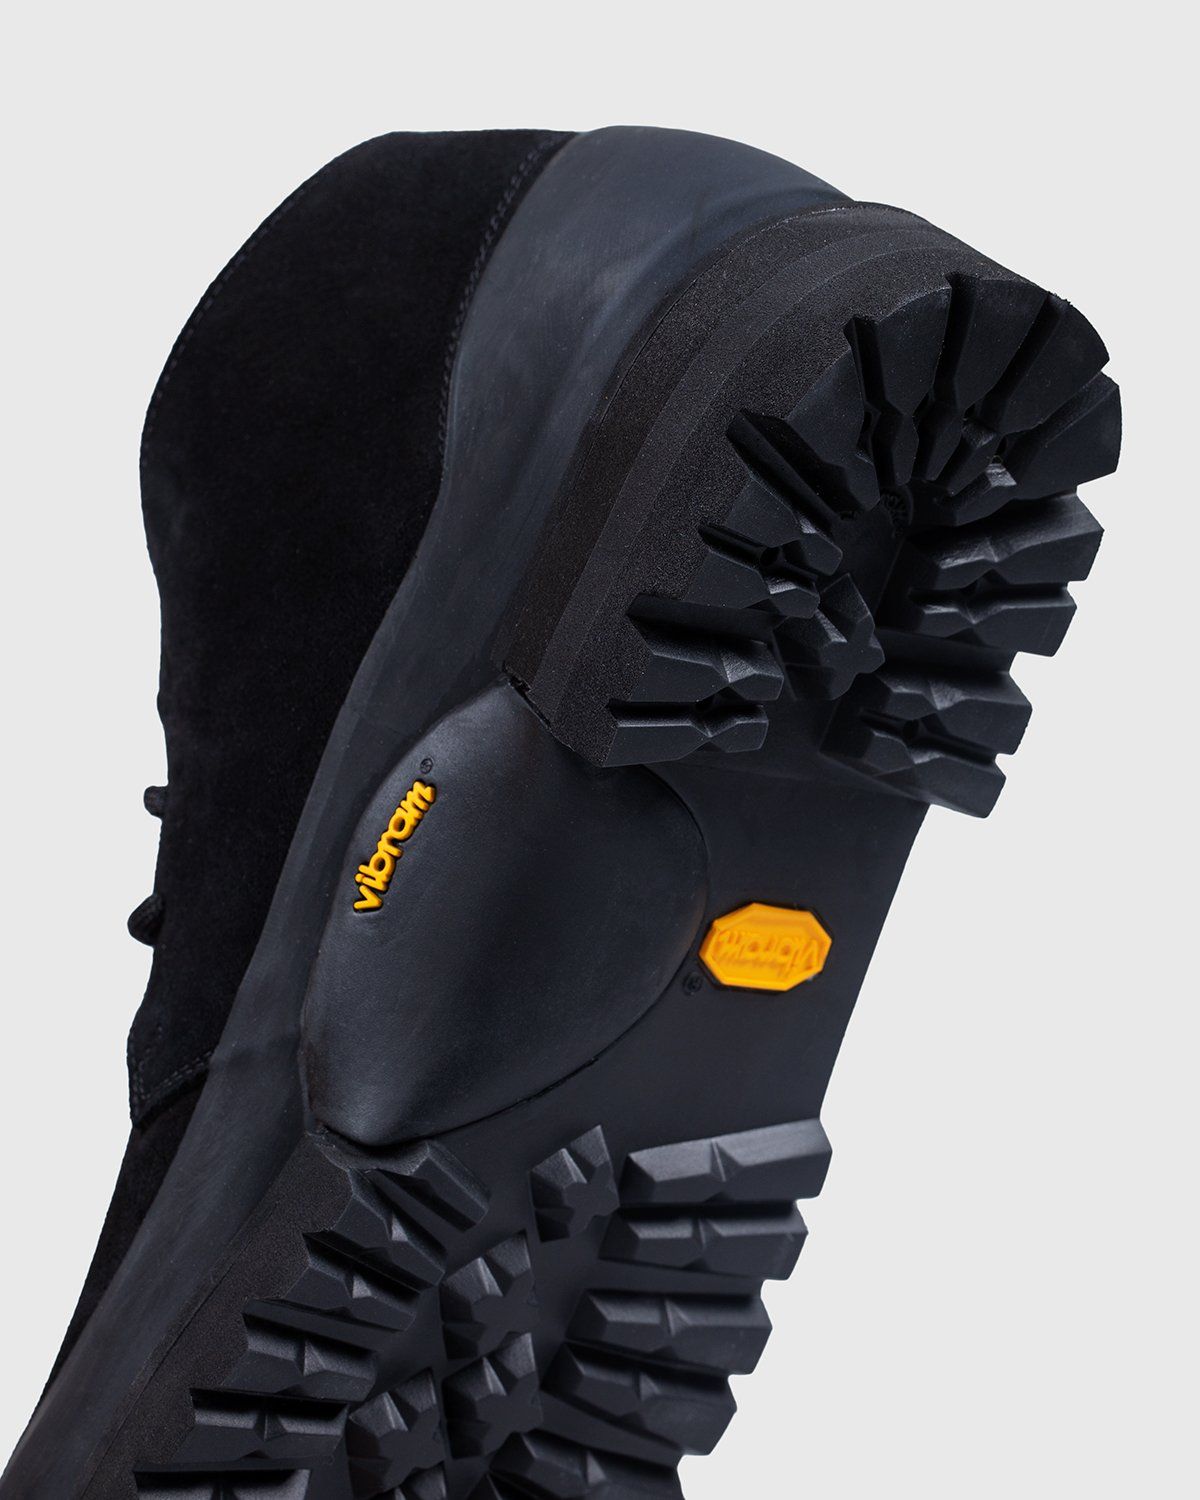 Diemme – Asiago Black Suede - Desert Boots - Black - Image 5